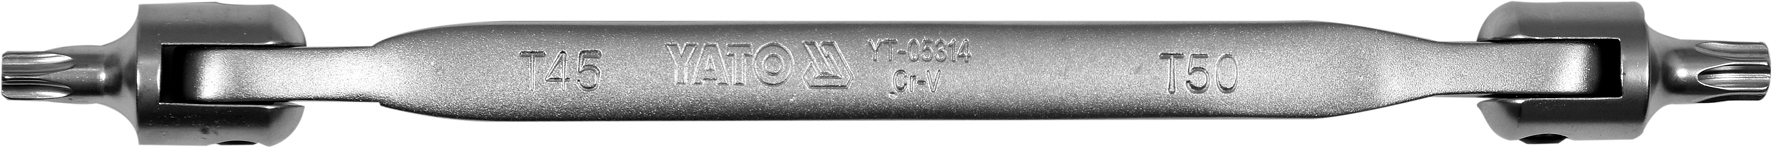 Ключ гаечный шарнирный Torx T45хT50  YATO YT-05314